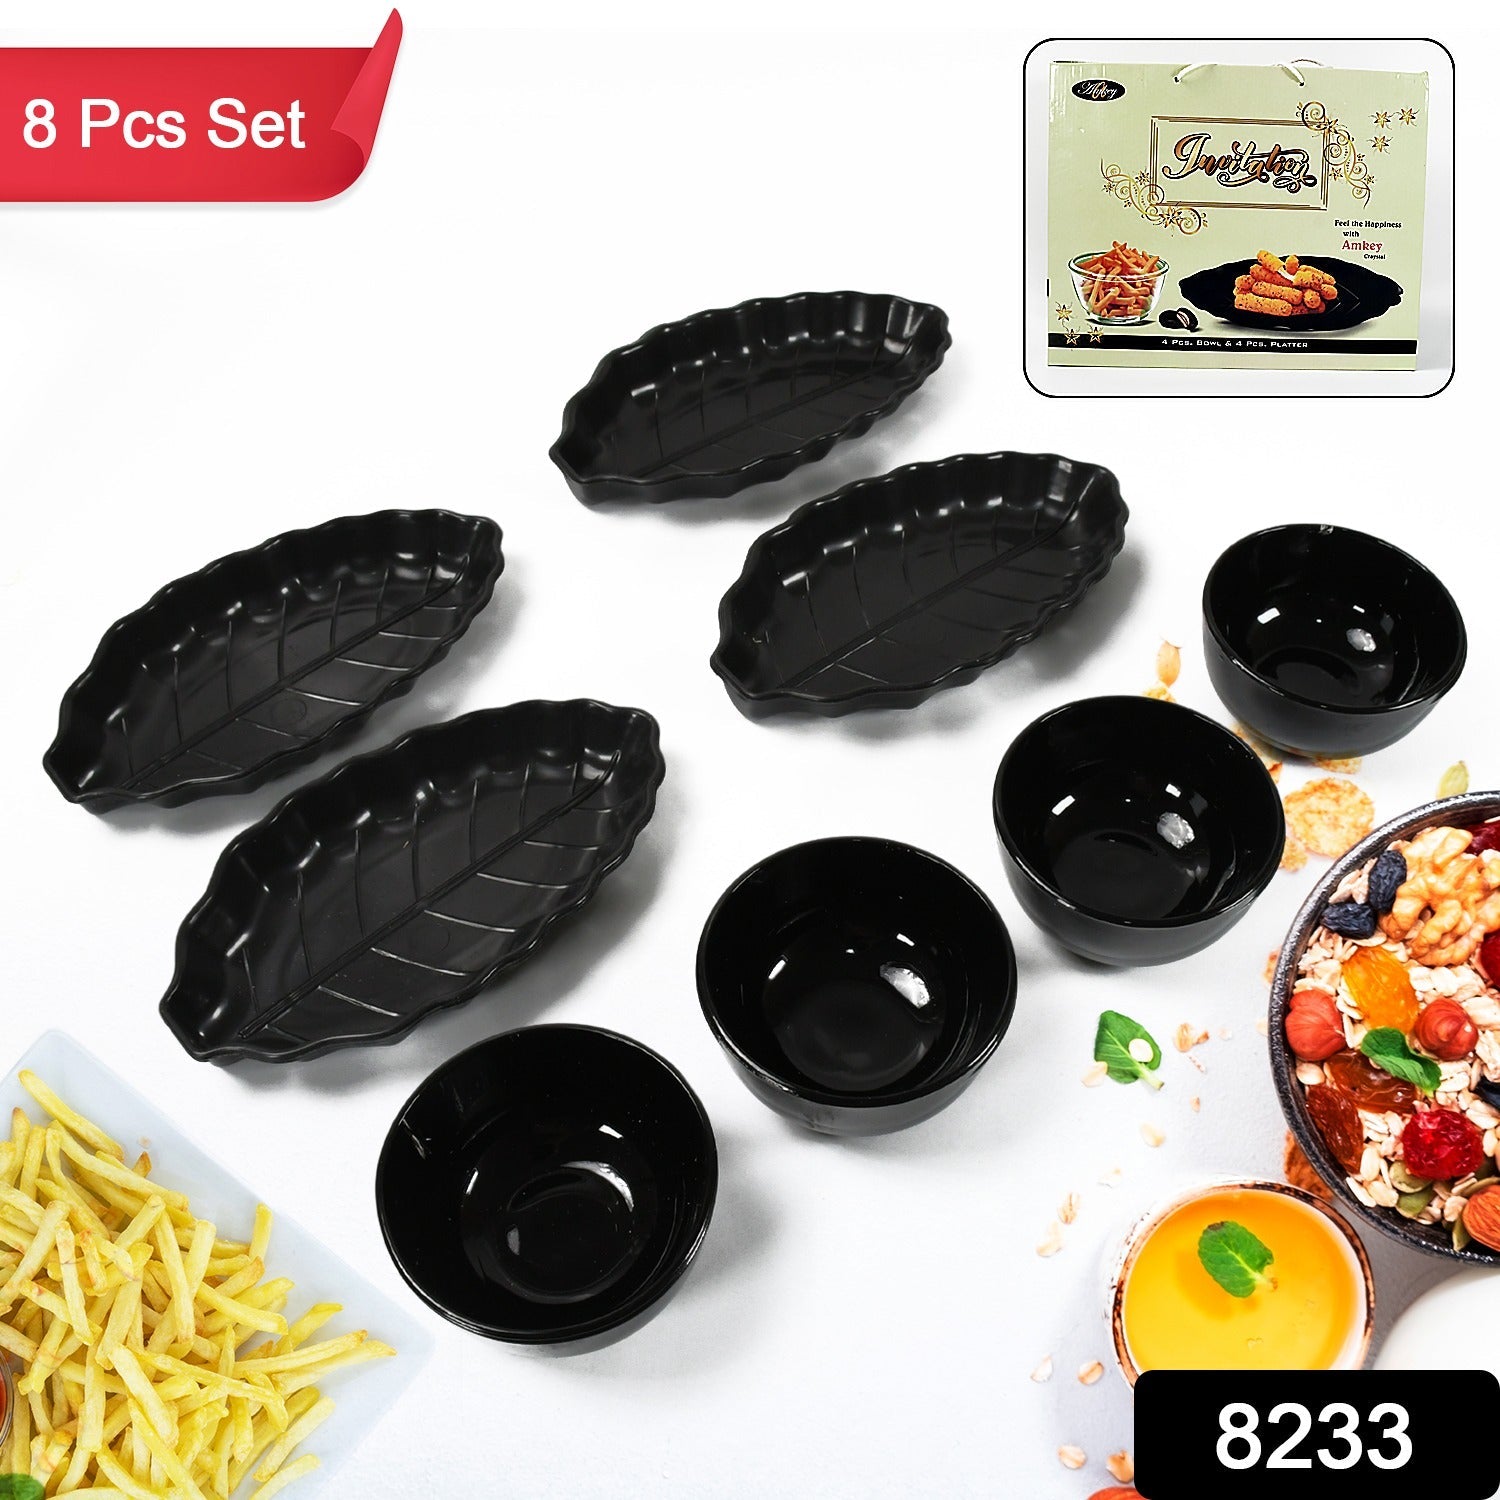 8233 Invitation Round Ceramic Snacks Bowl With Plastic Leaf shape Serving platter Portable, Lightweight Breakfast, Serving Bowl | Ideal for Rice, Pasta, Desserts Home & Kitchen Serving Bowl & platter (8 Pcs set)